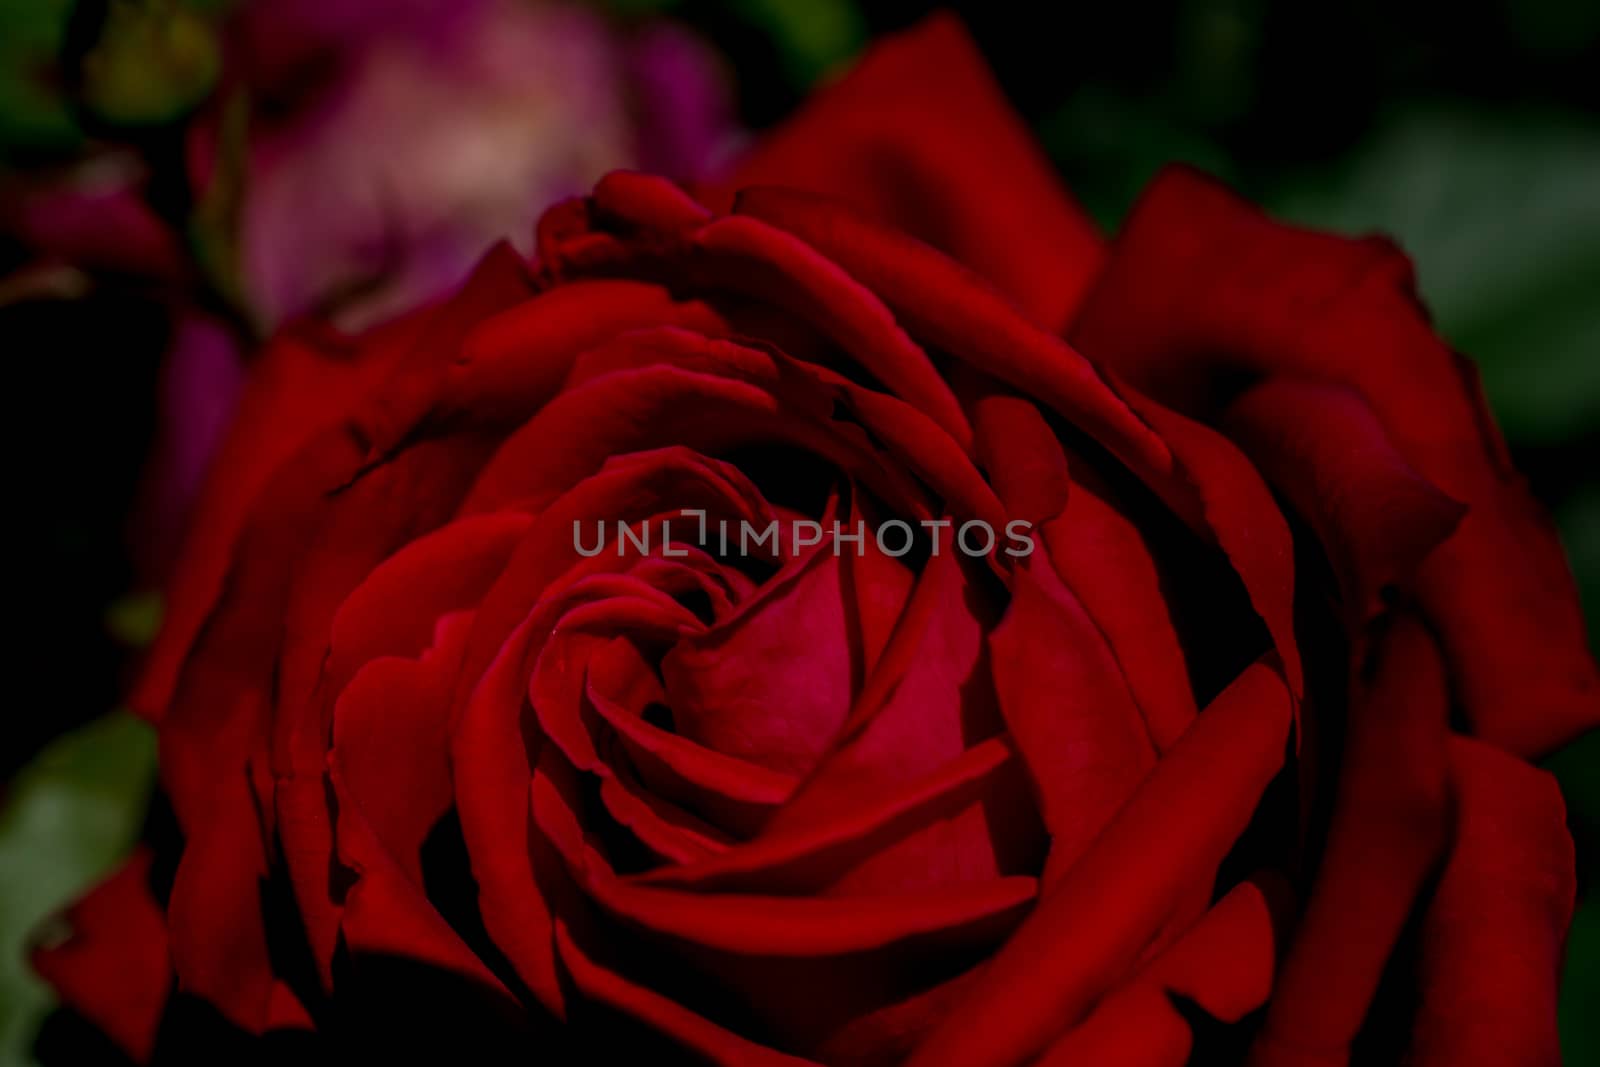 Beautiful fresh roses in close up view by berkay